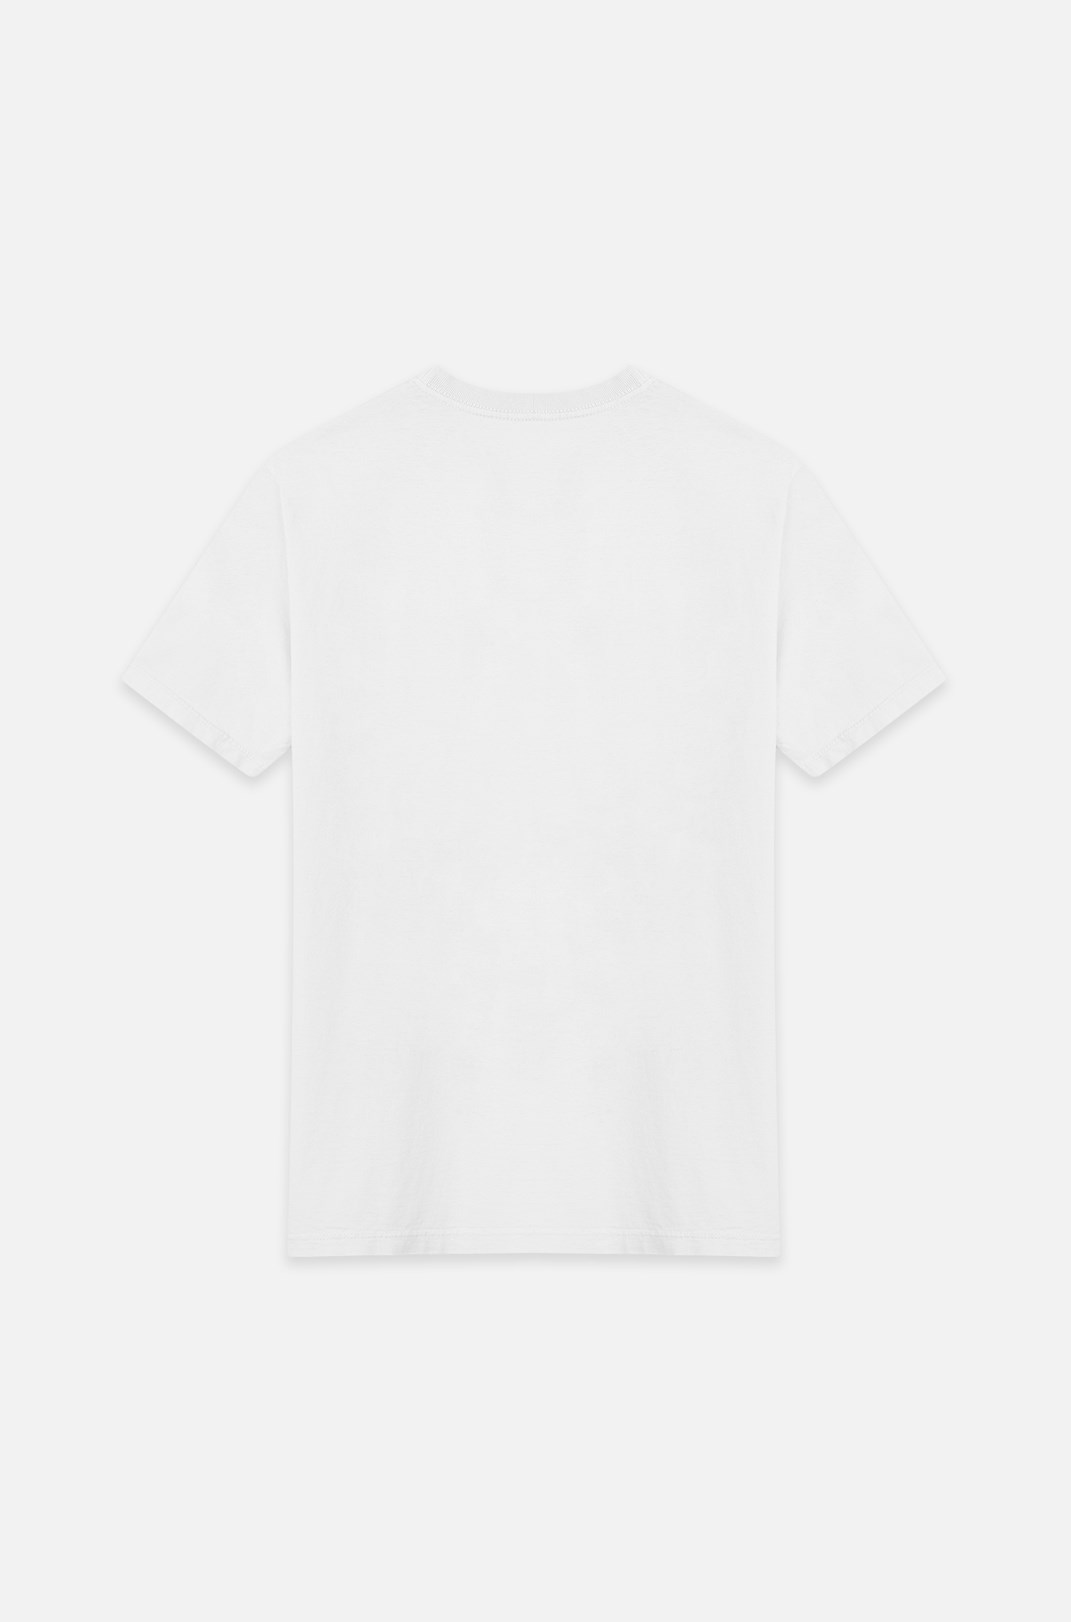 Camiseta Bold Approve Cleaning Branca E Preta